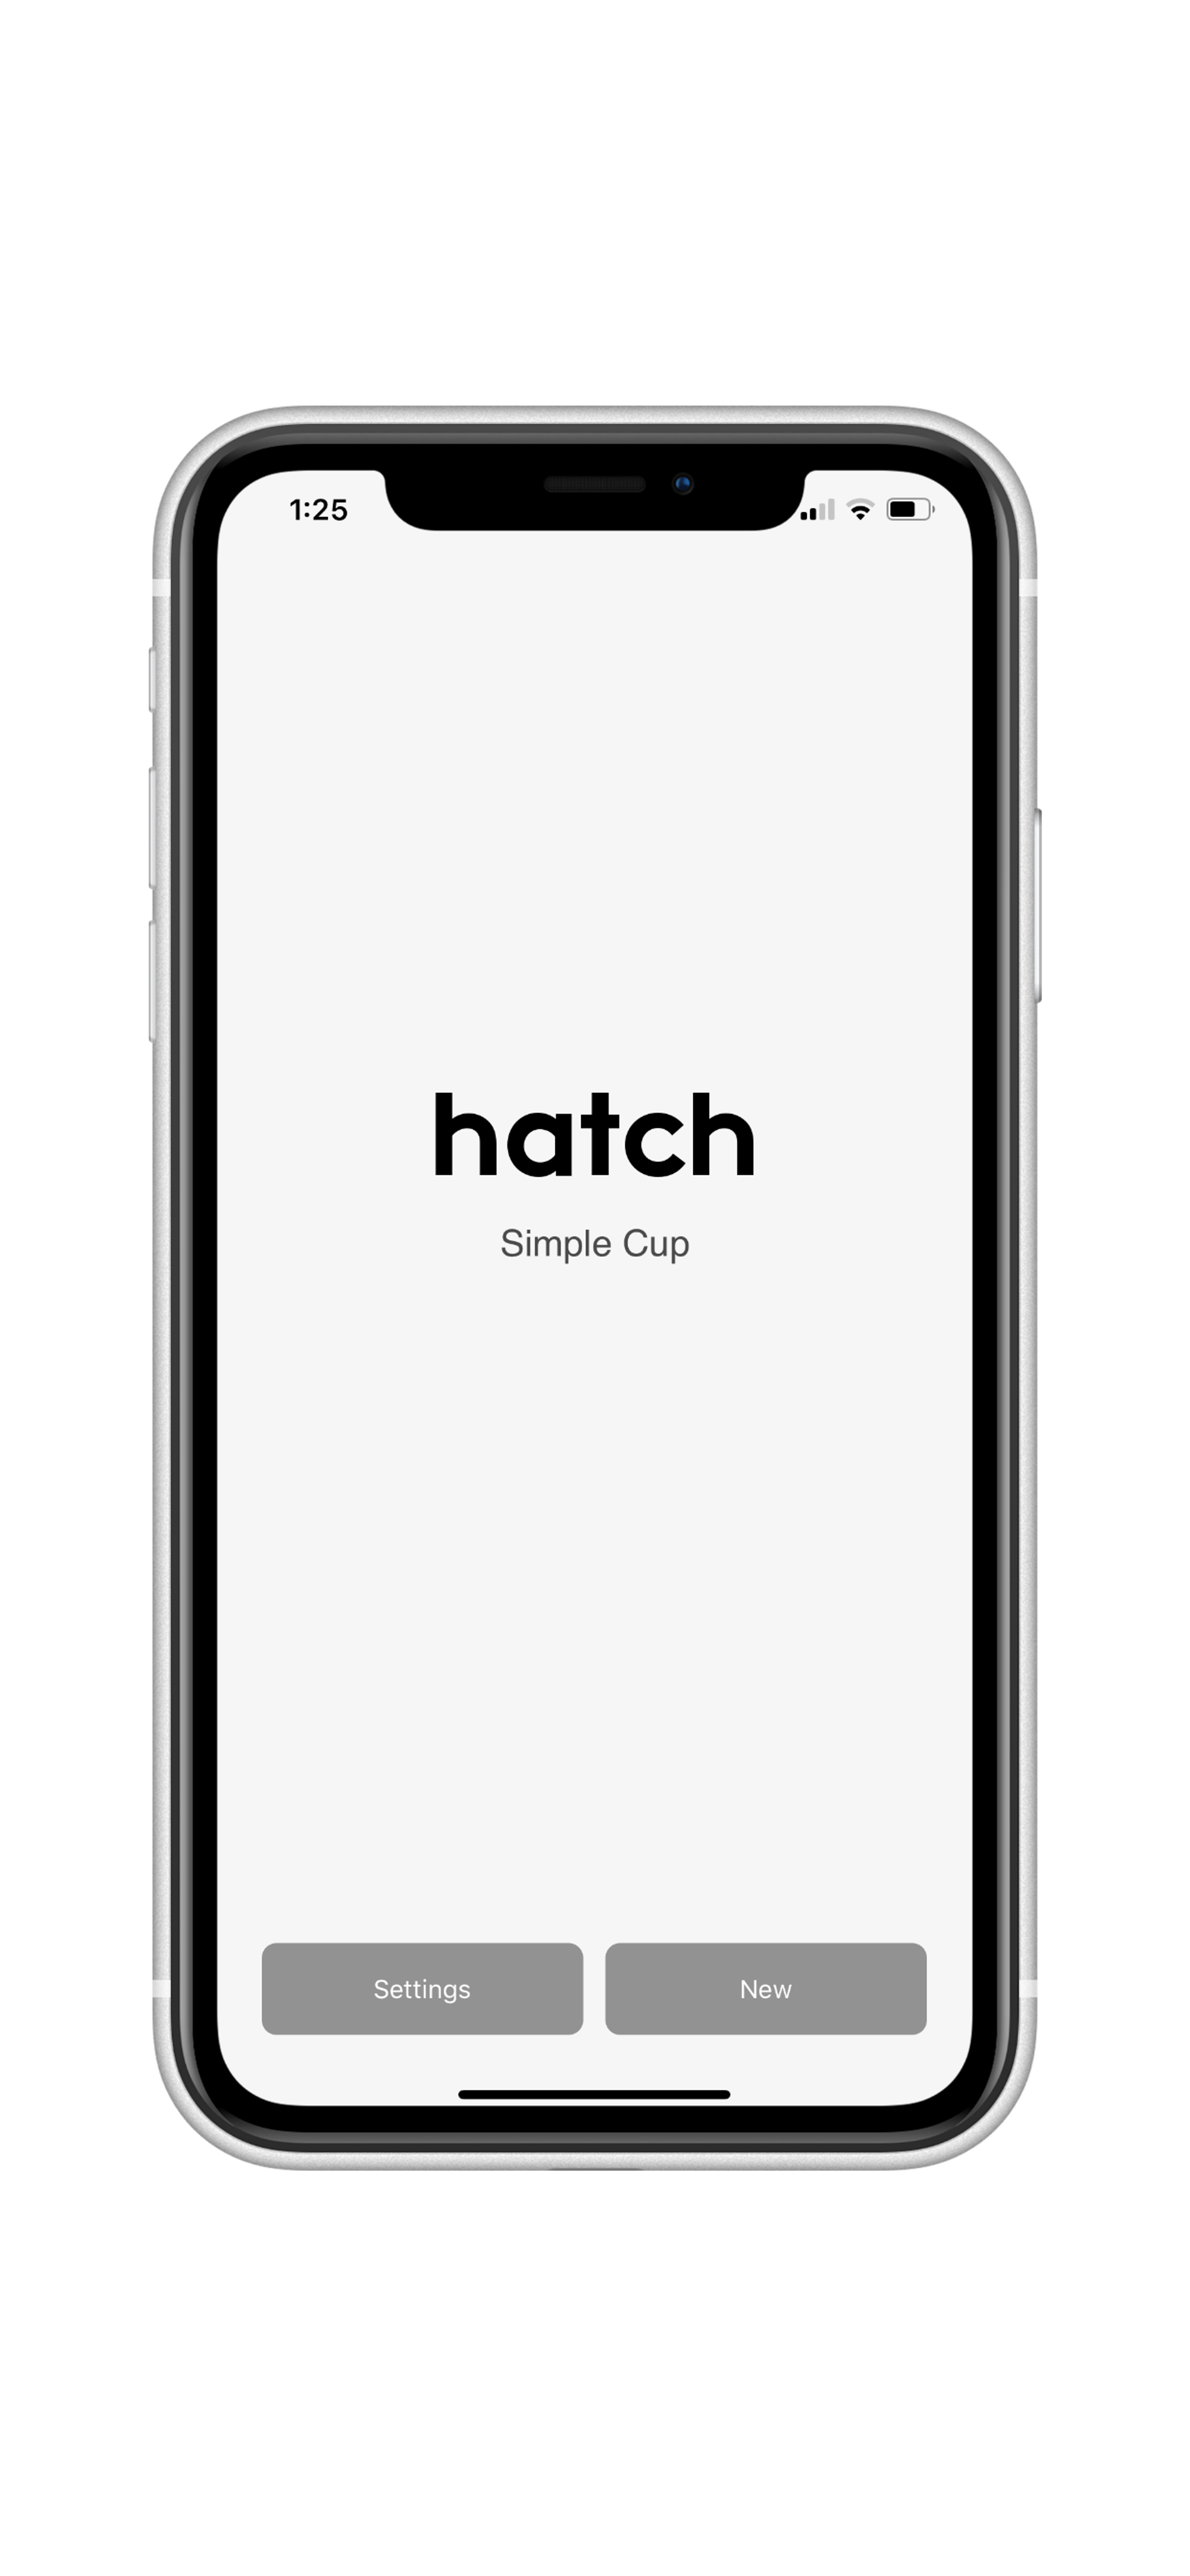 https://apps.apple.com/us/app/hatch-simple-cup/id1470900191?ls=1